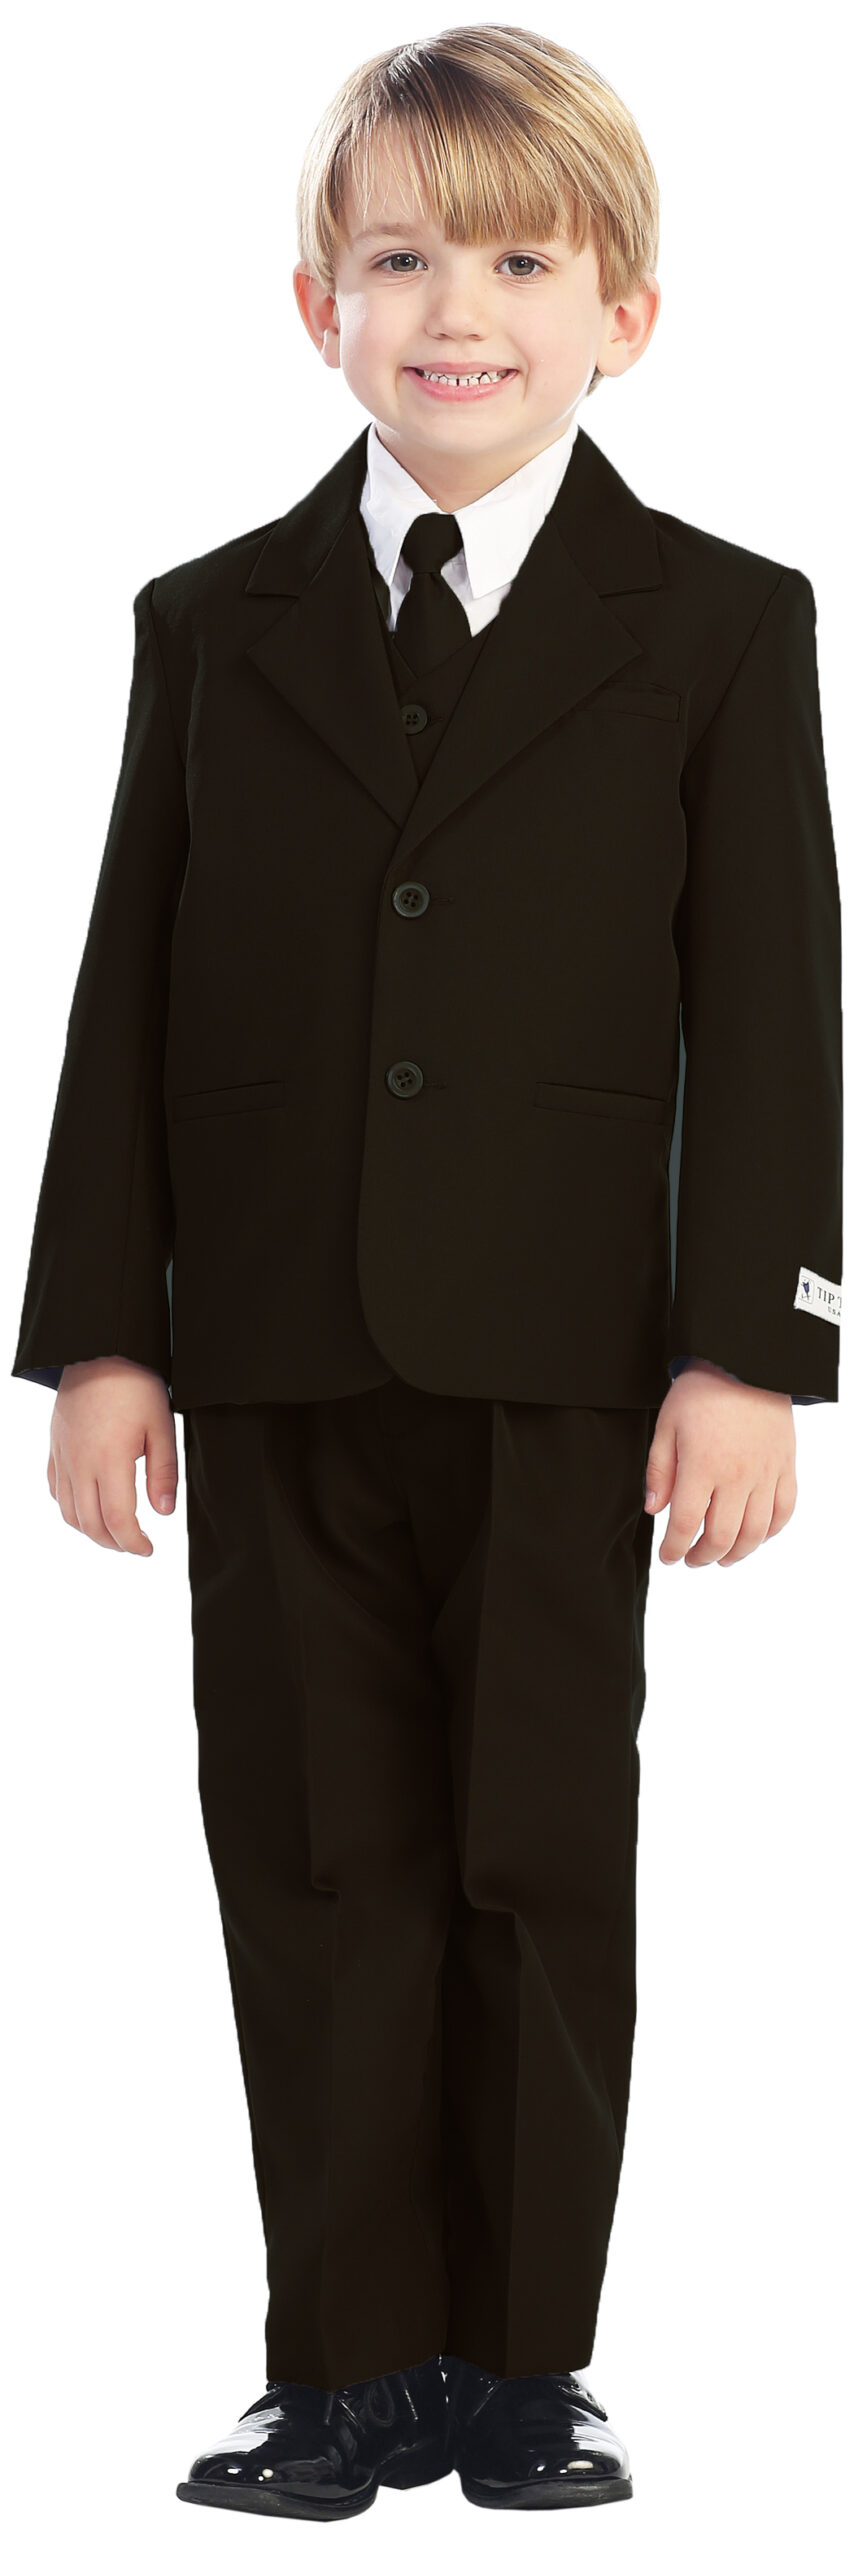 Avery Hill 5-Piece Boy's 2-Button Dress Suit Full-Back Vest - Brown Size 8